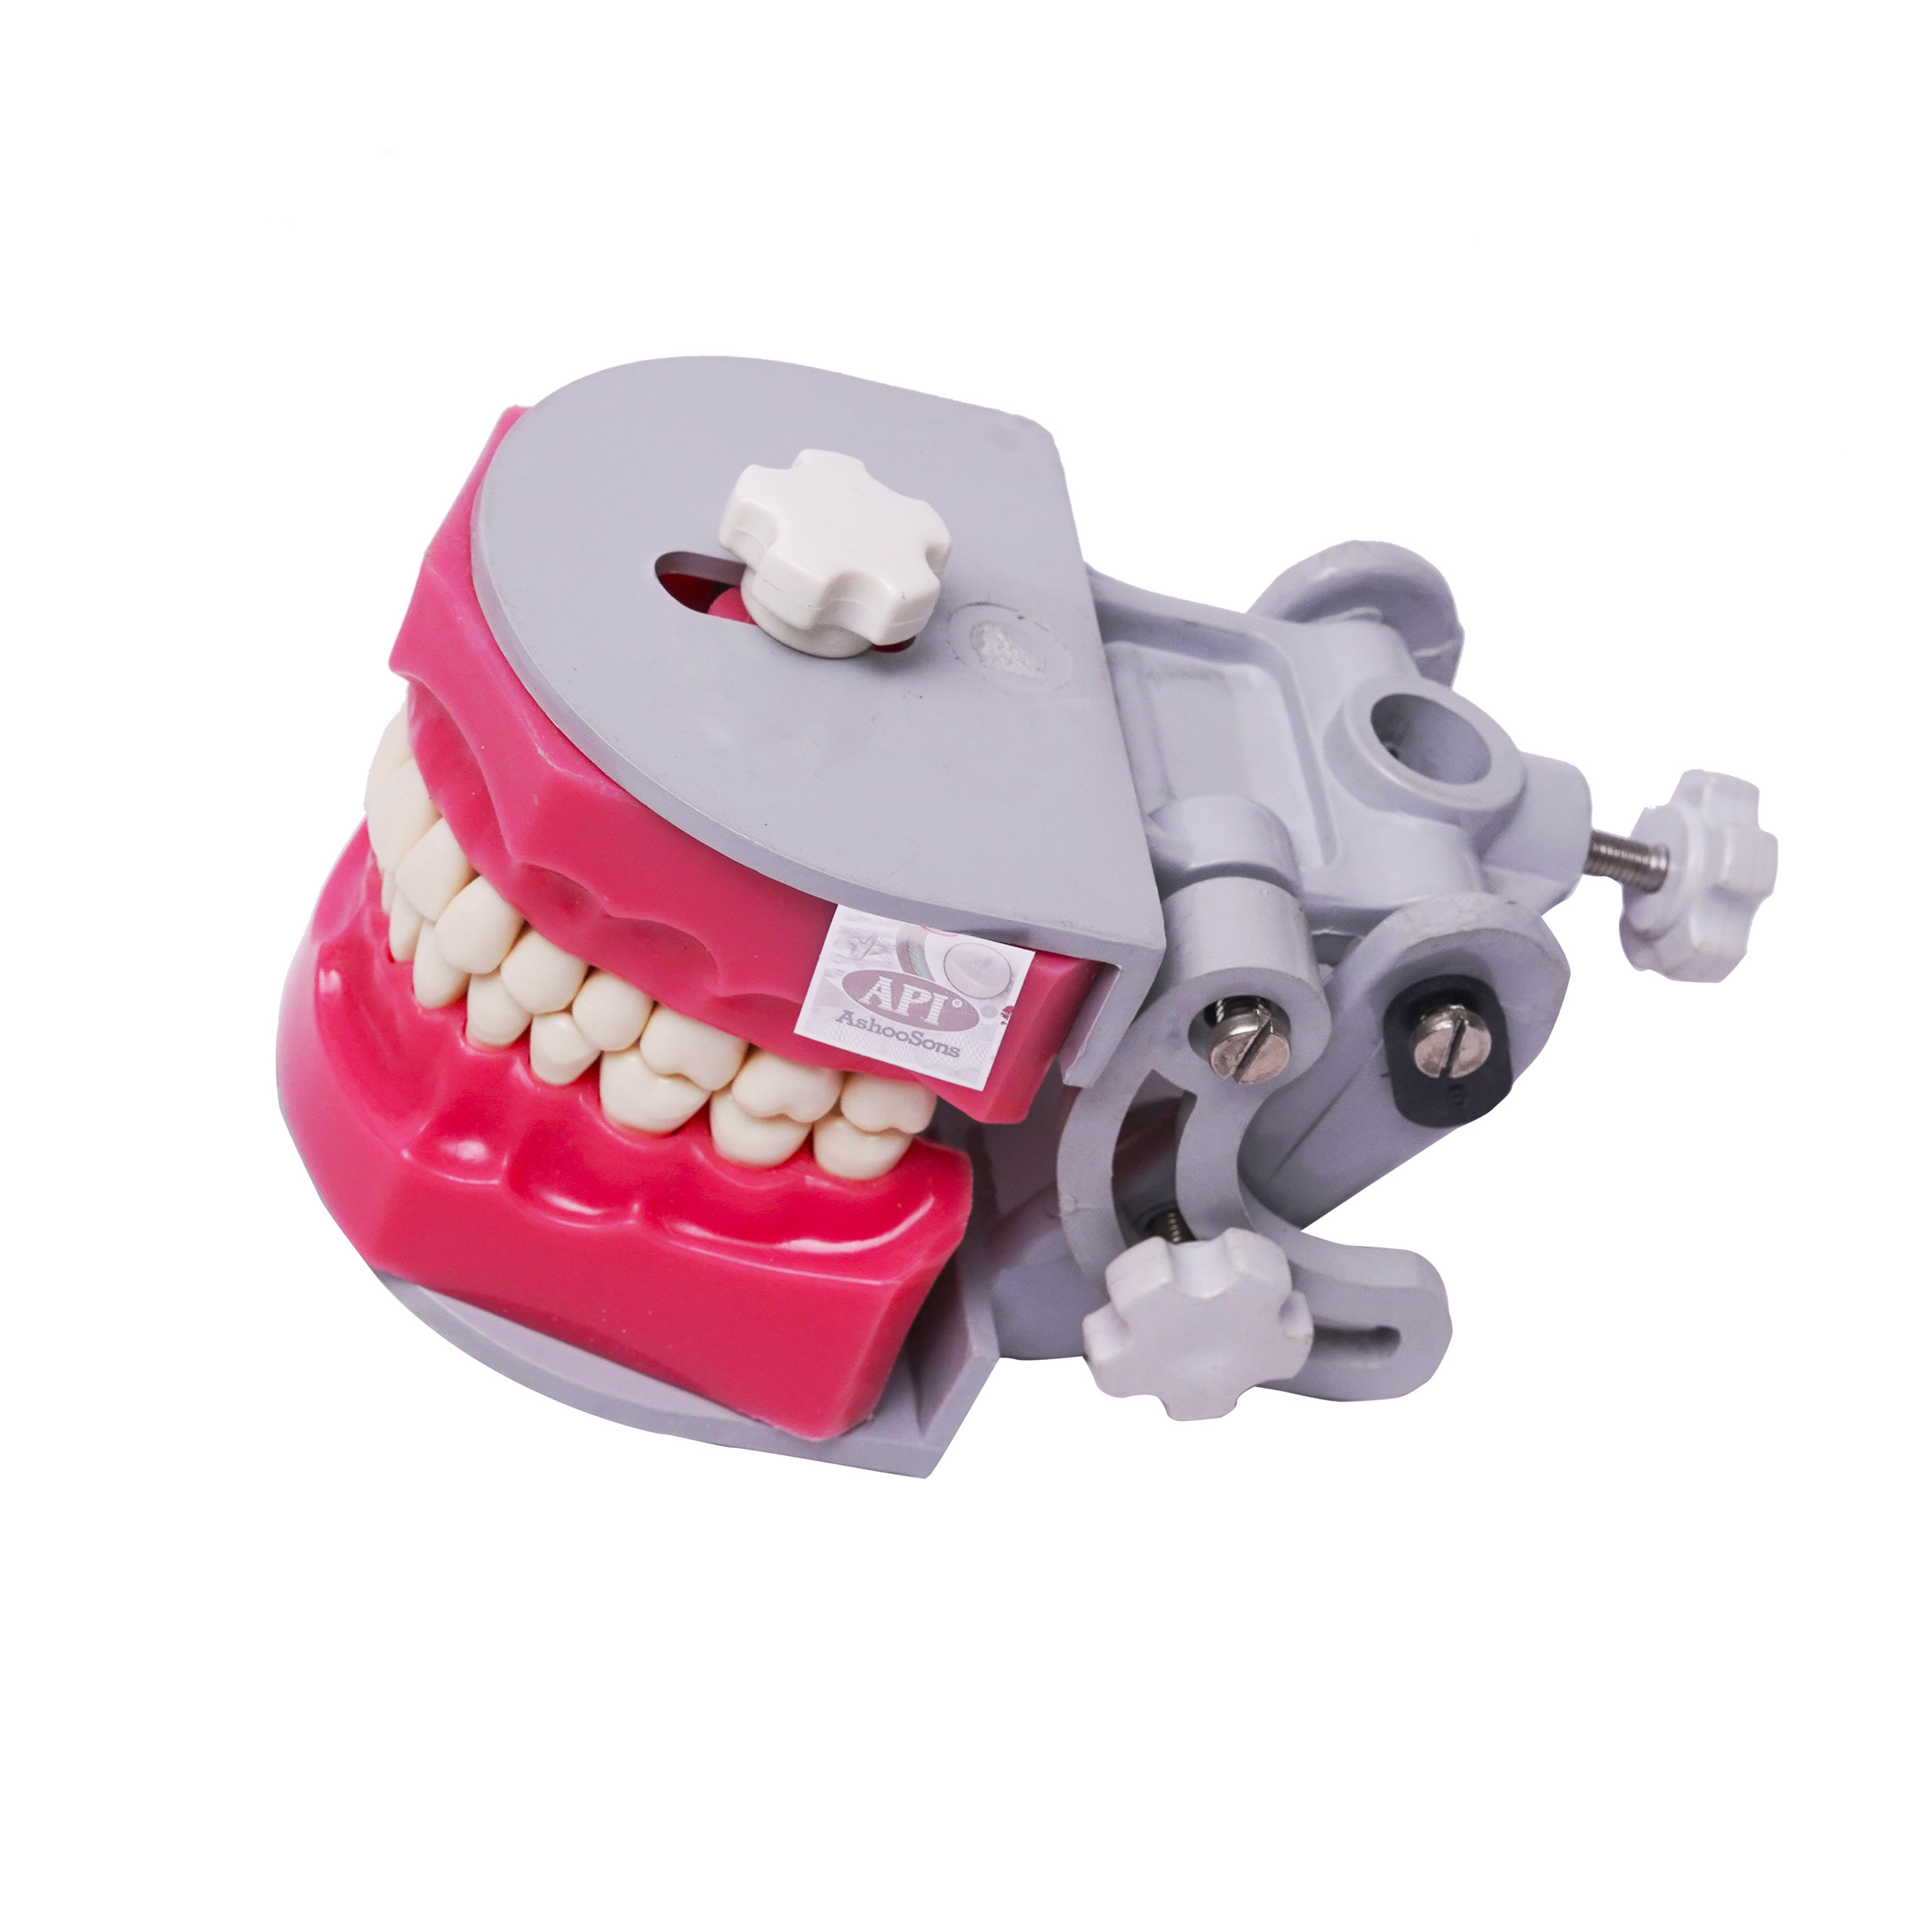 API Dental Study Model Typho With Jaw Set